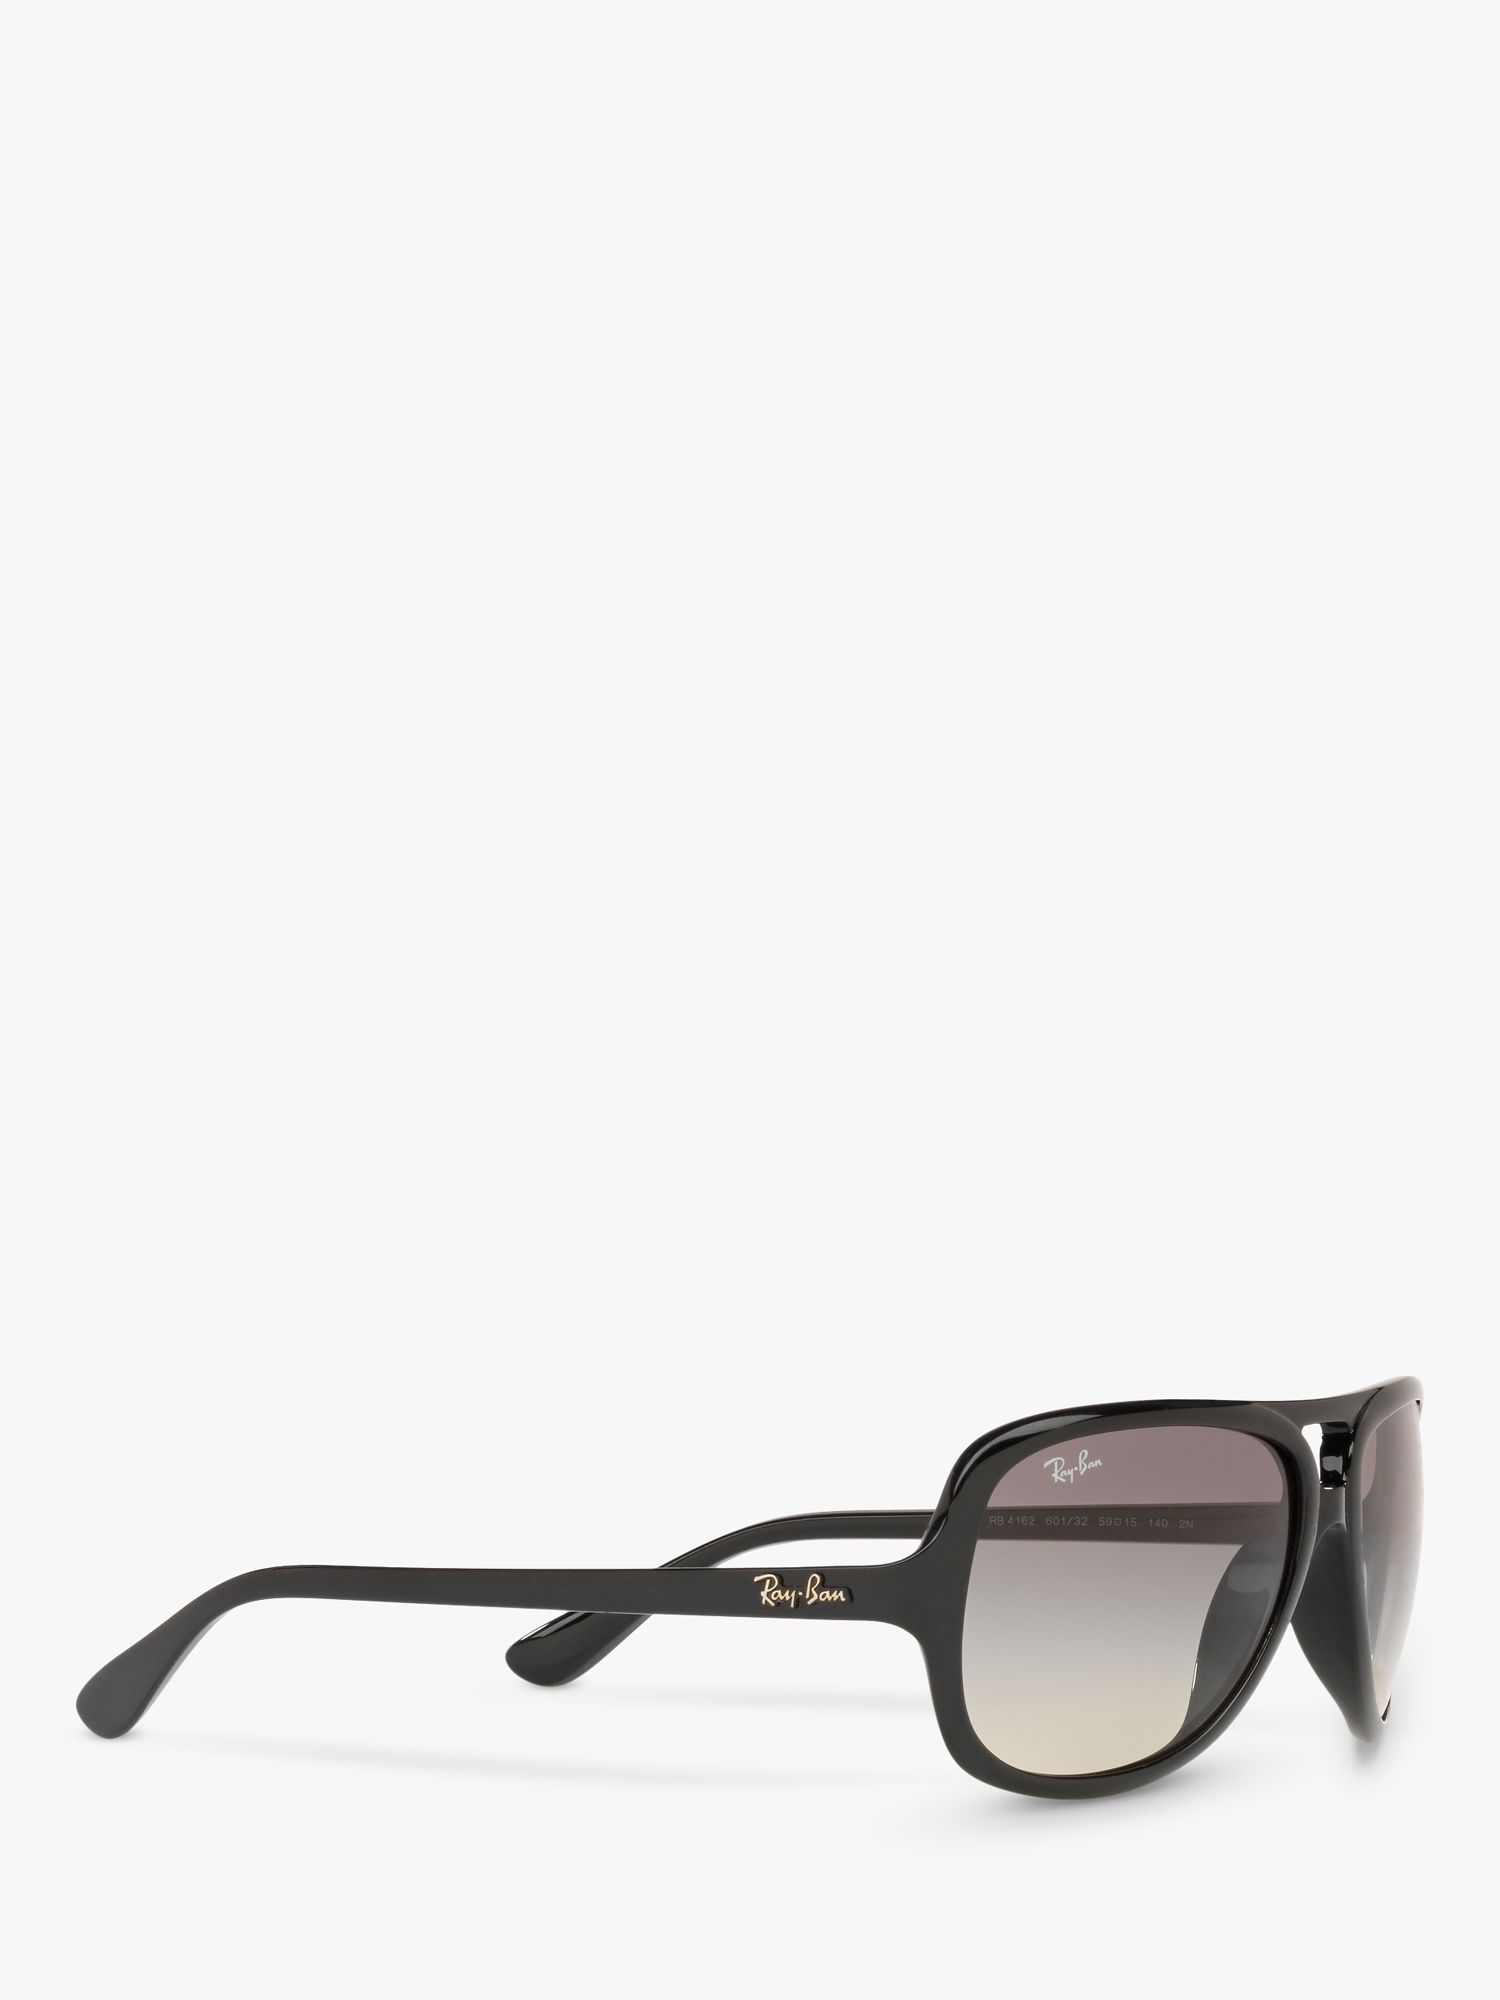 Ray-Ban RB4162 Men's Aviator Sunglasses, Black/Grey Gradient